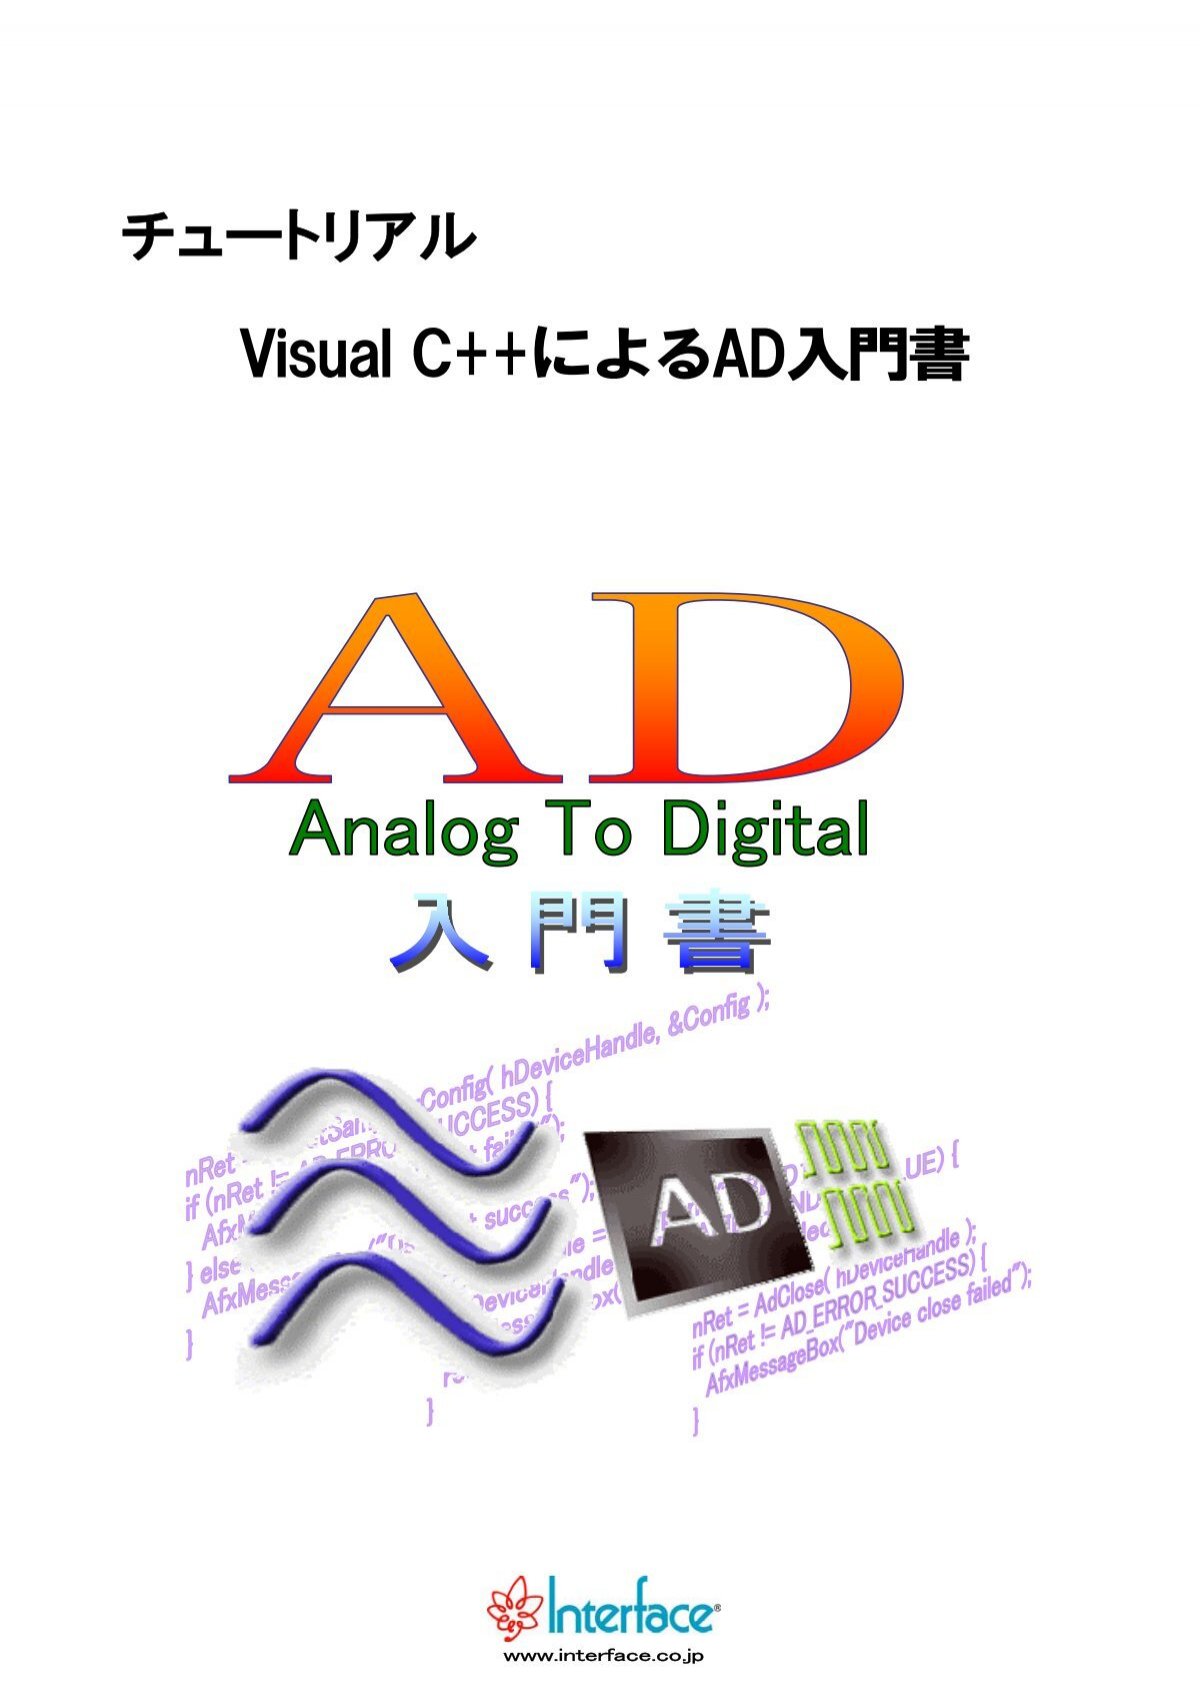 Visual C++によるAD入門書 - インタフェース